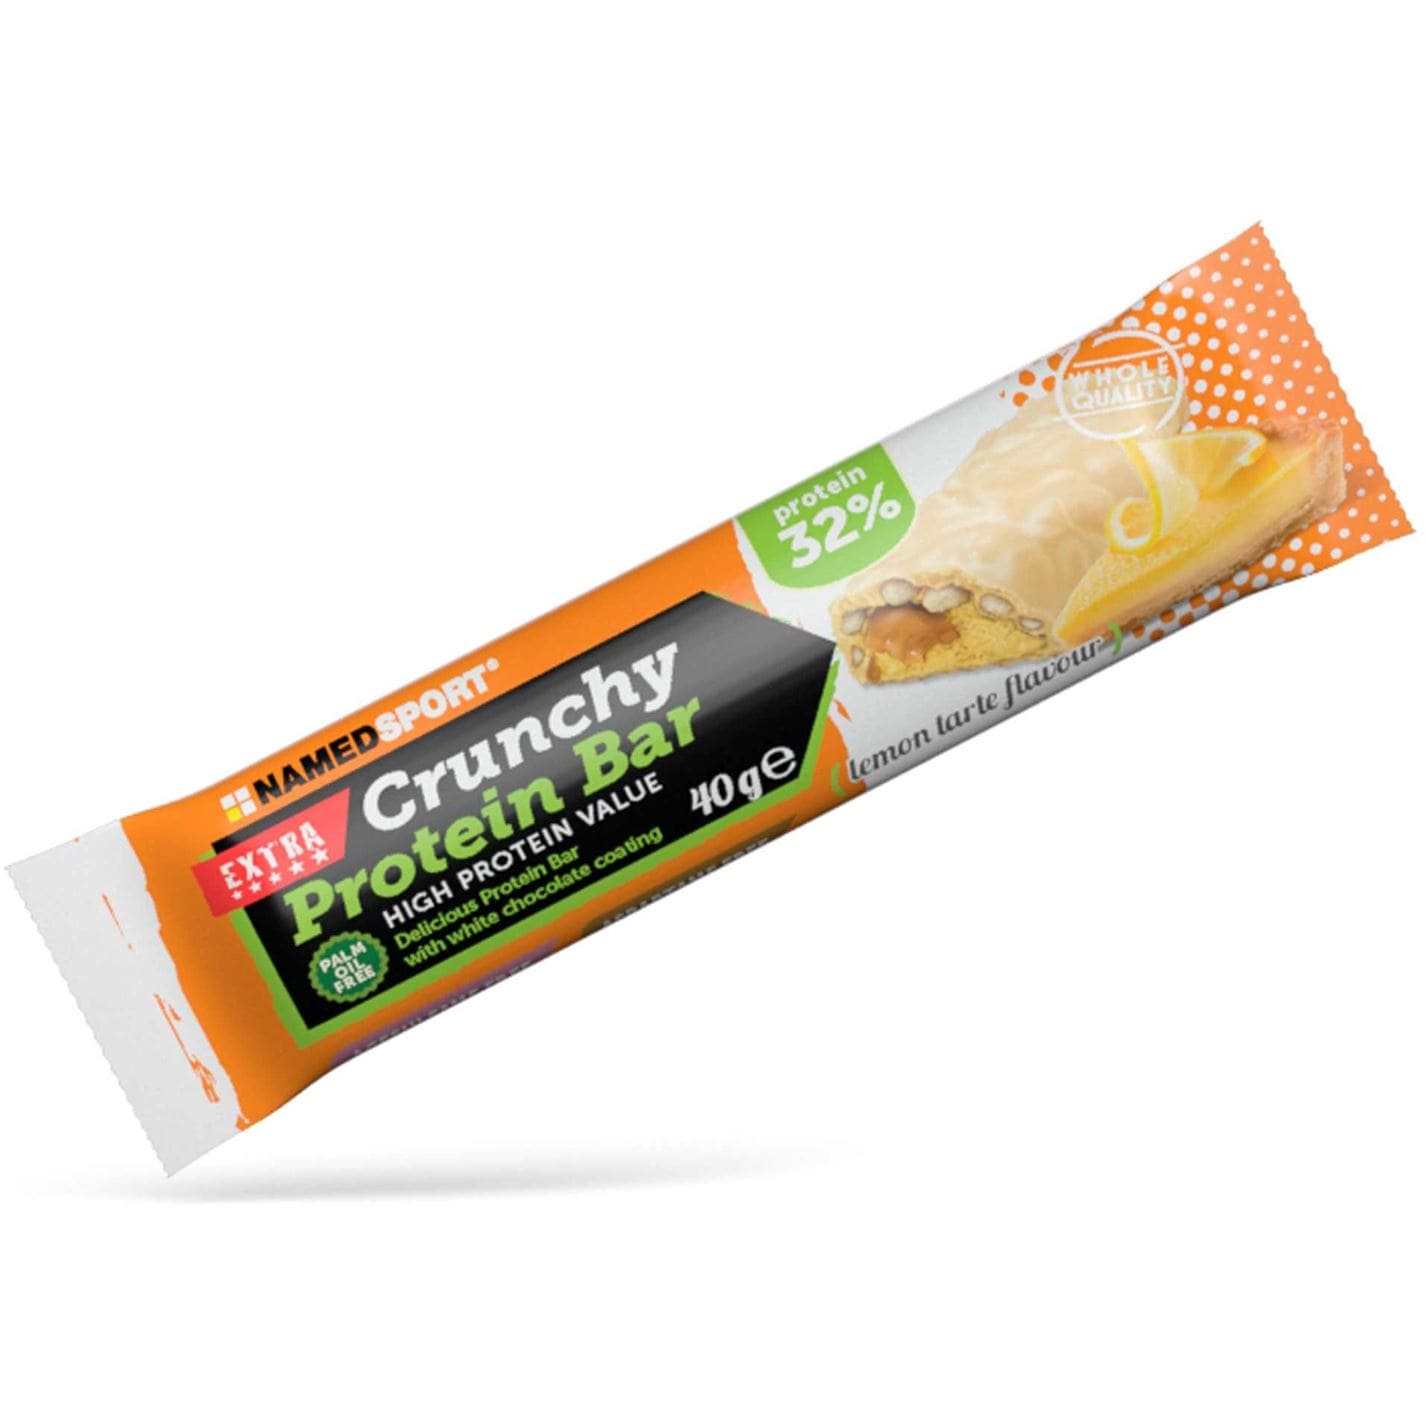 NAMEDSport Crunchy Protein Bar 40g